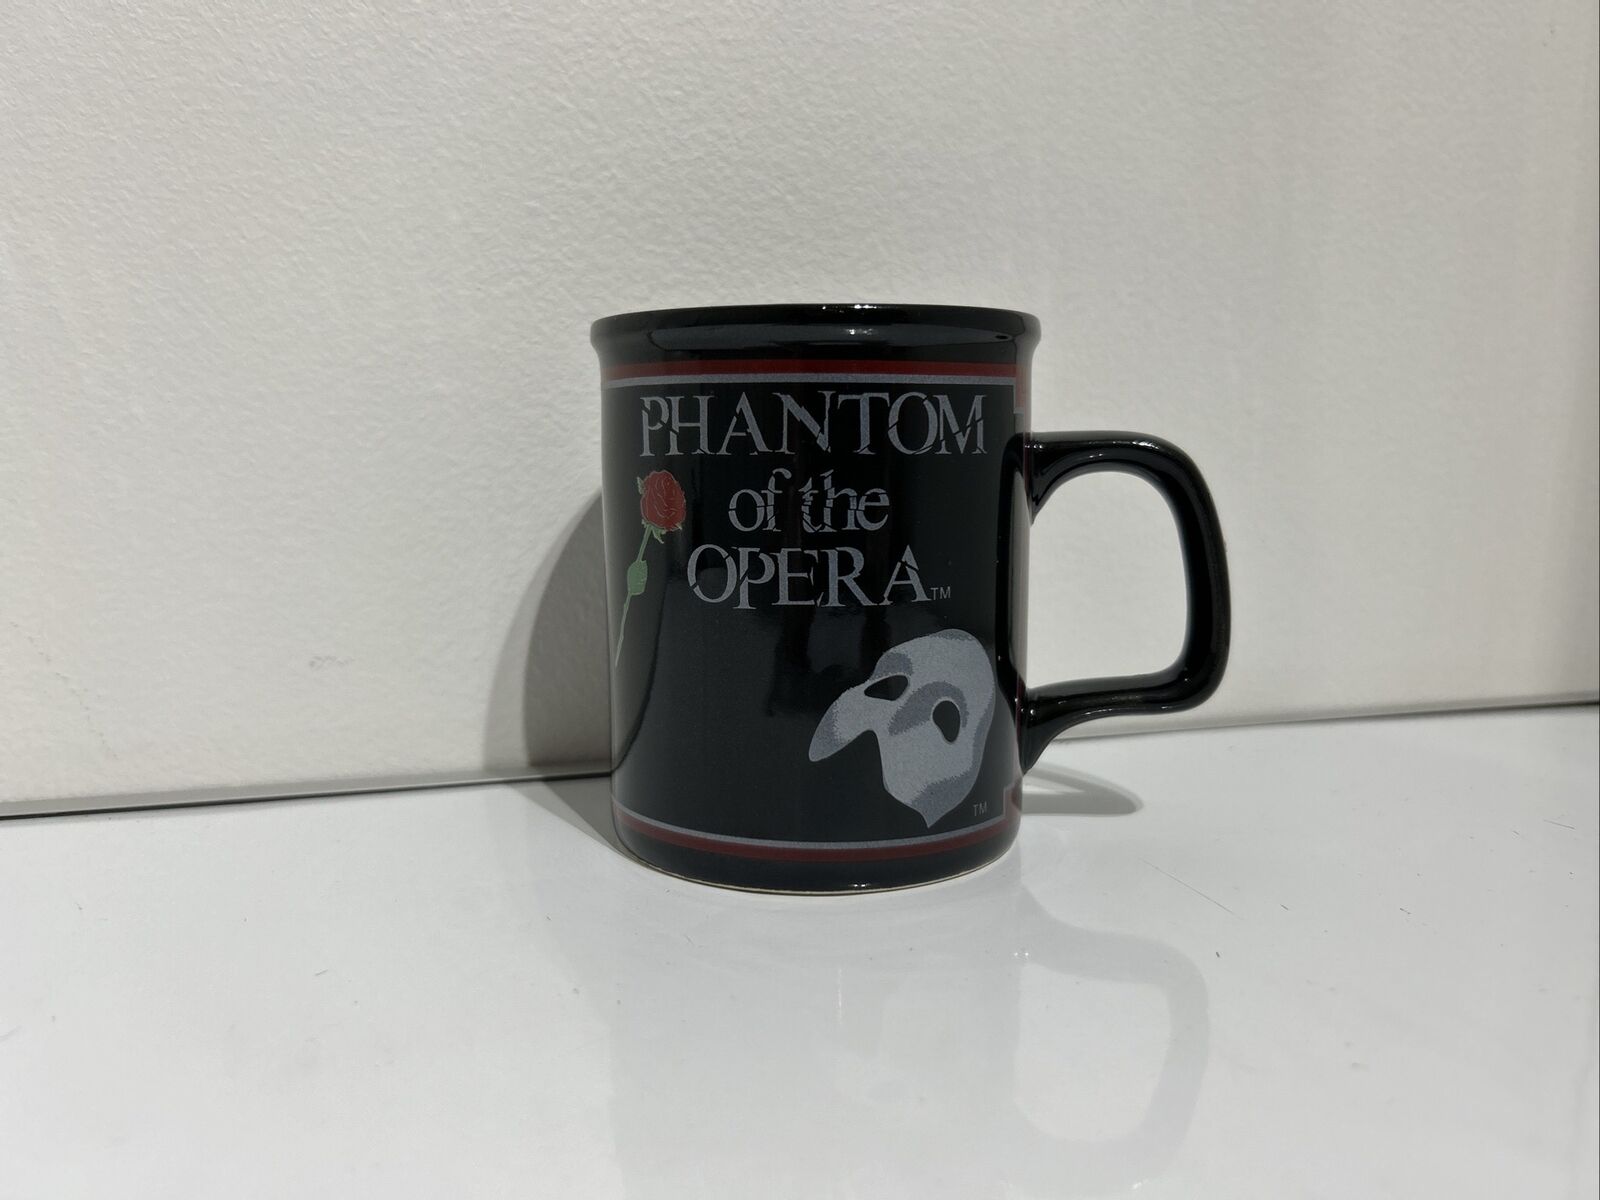 Vintage 1988 Phantom of the Opera Black Souvenir Ceramic Coffee Mug - Like New